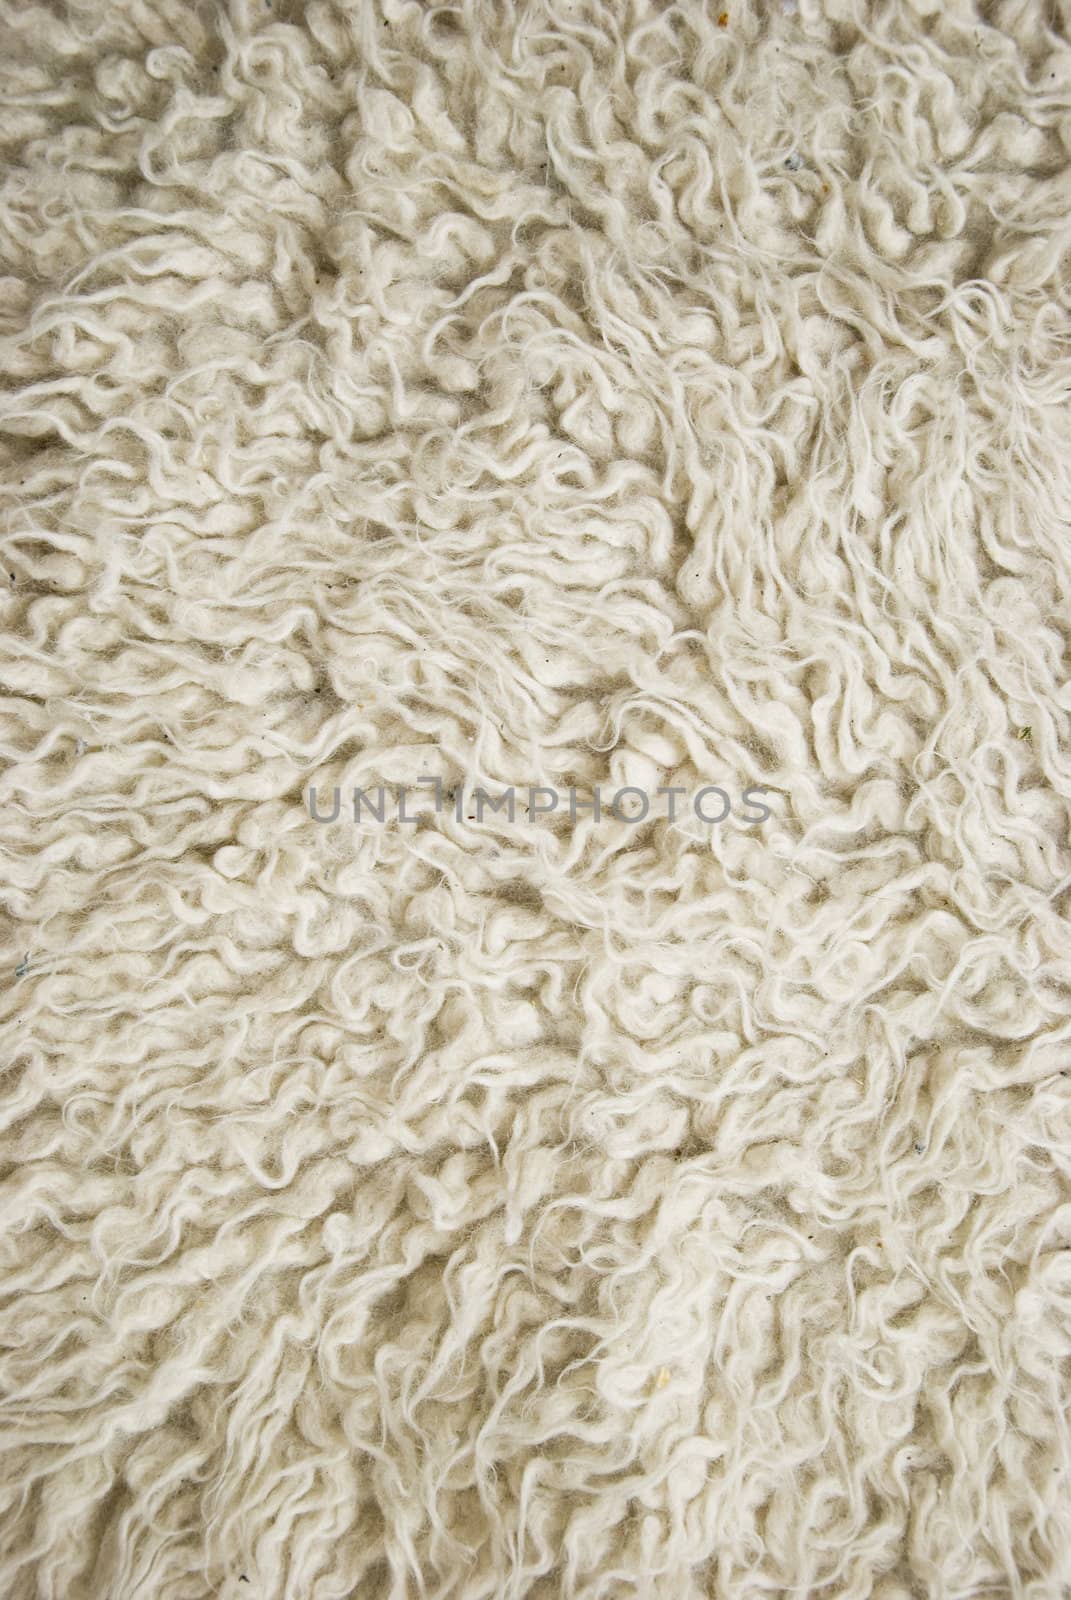 Mat made of wool by sauletas